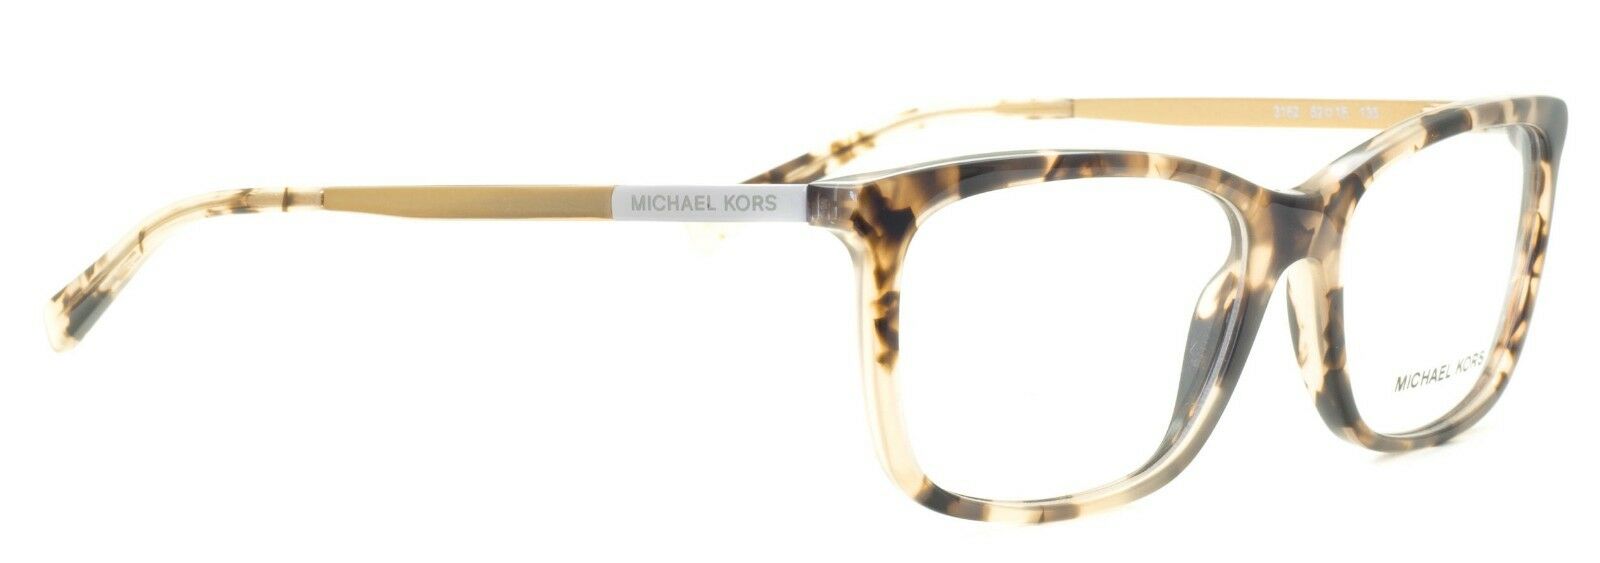 MICHAEL KORS MK 4030 3162 52mm Eyewear FRAMES RX Optical Eyeglasses Glasses -New